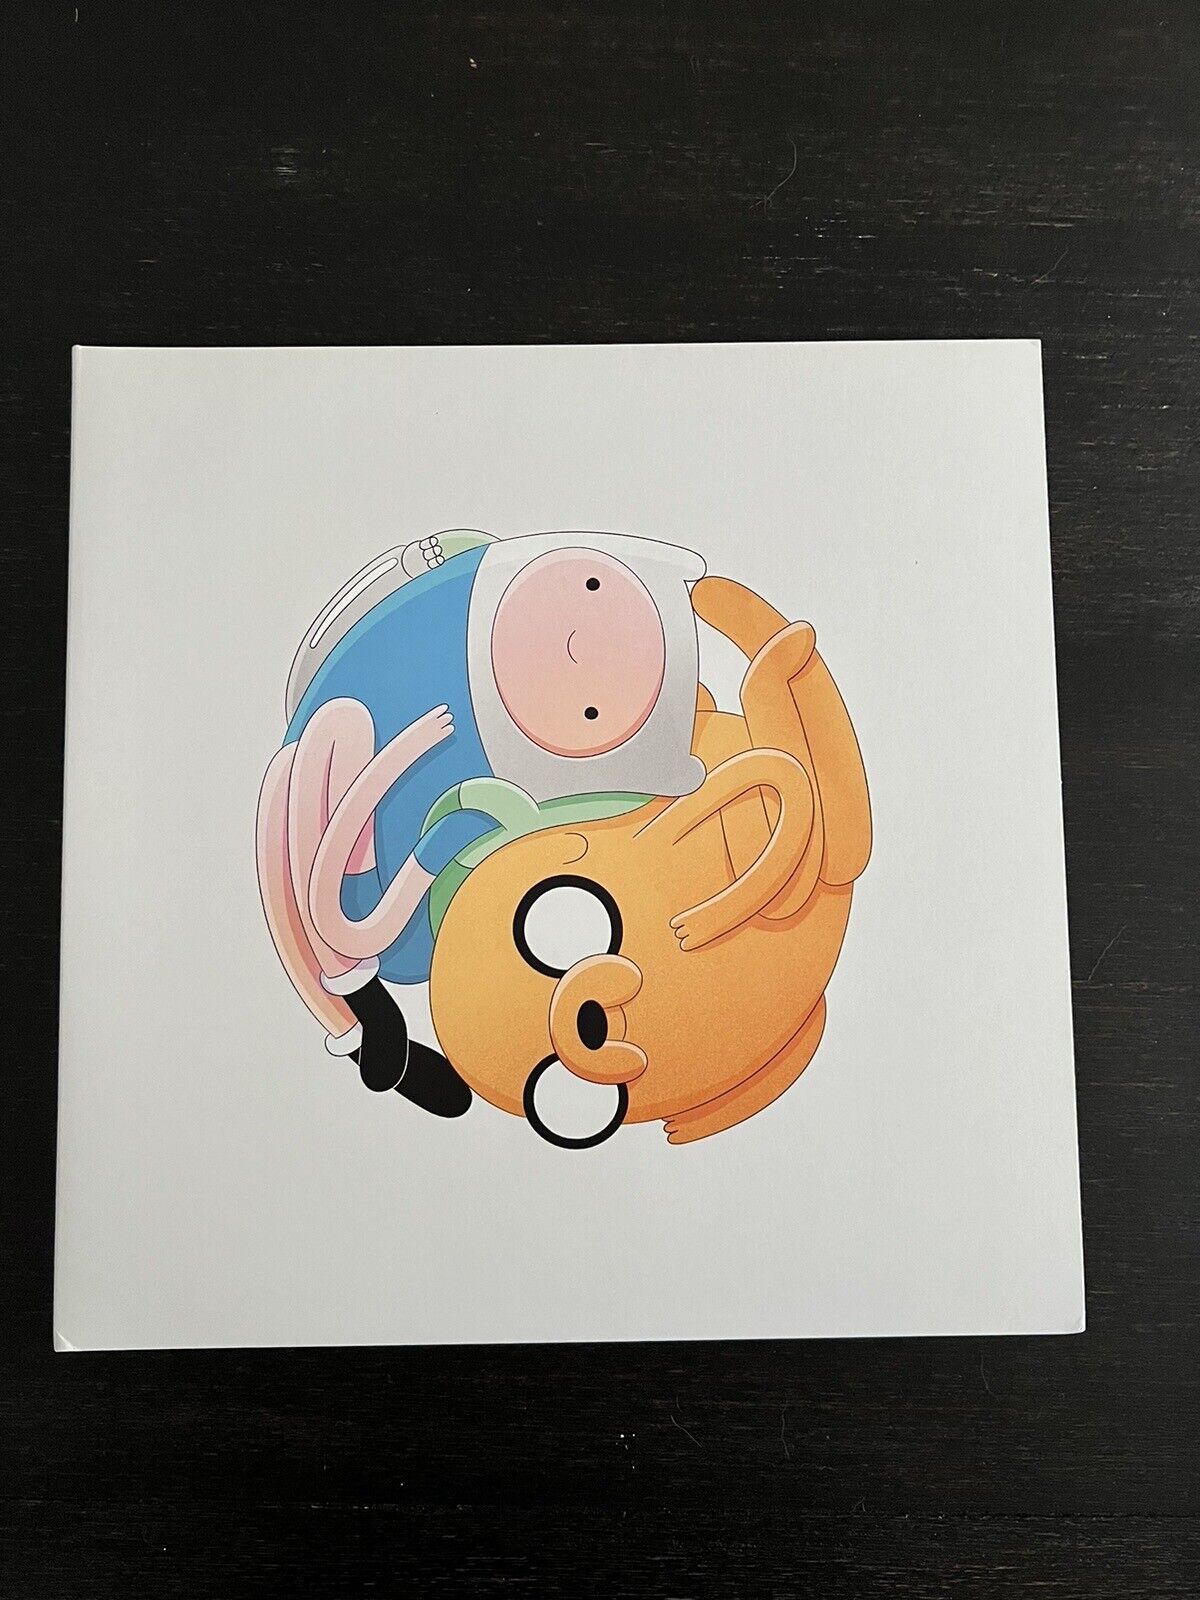 Adventure Time - Come Along With Me Soundtrack Ltd Ed Vinyl LP (Mondo) with obi